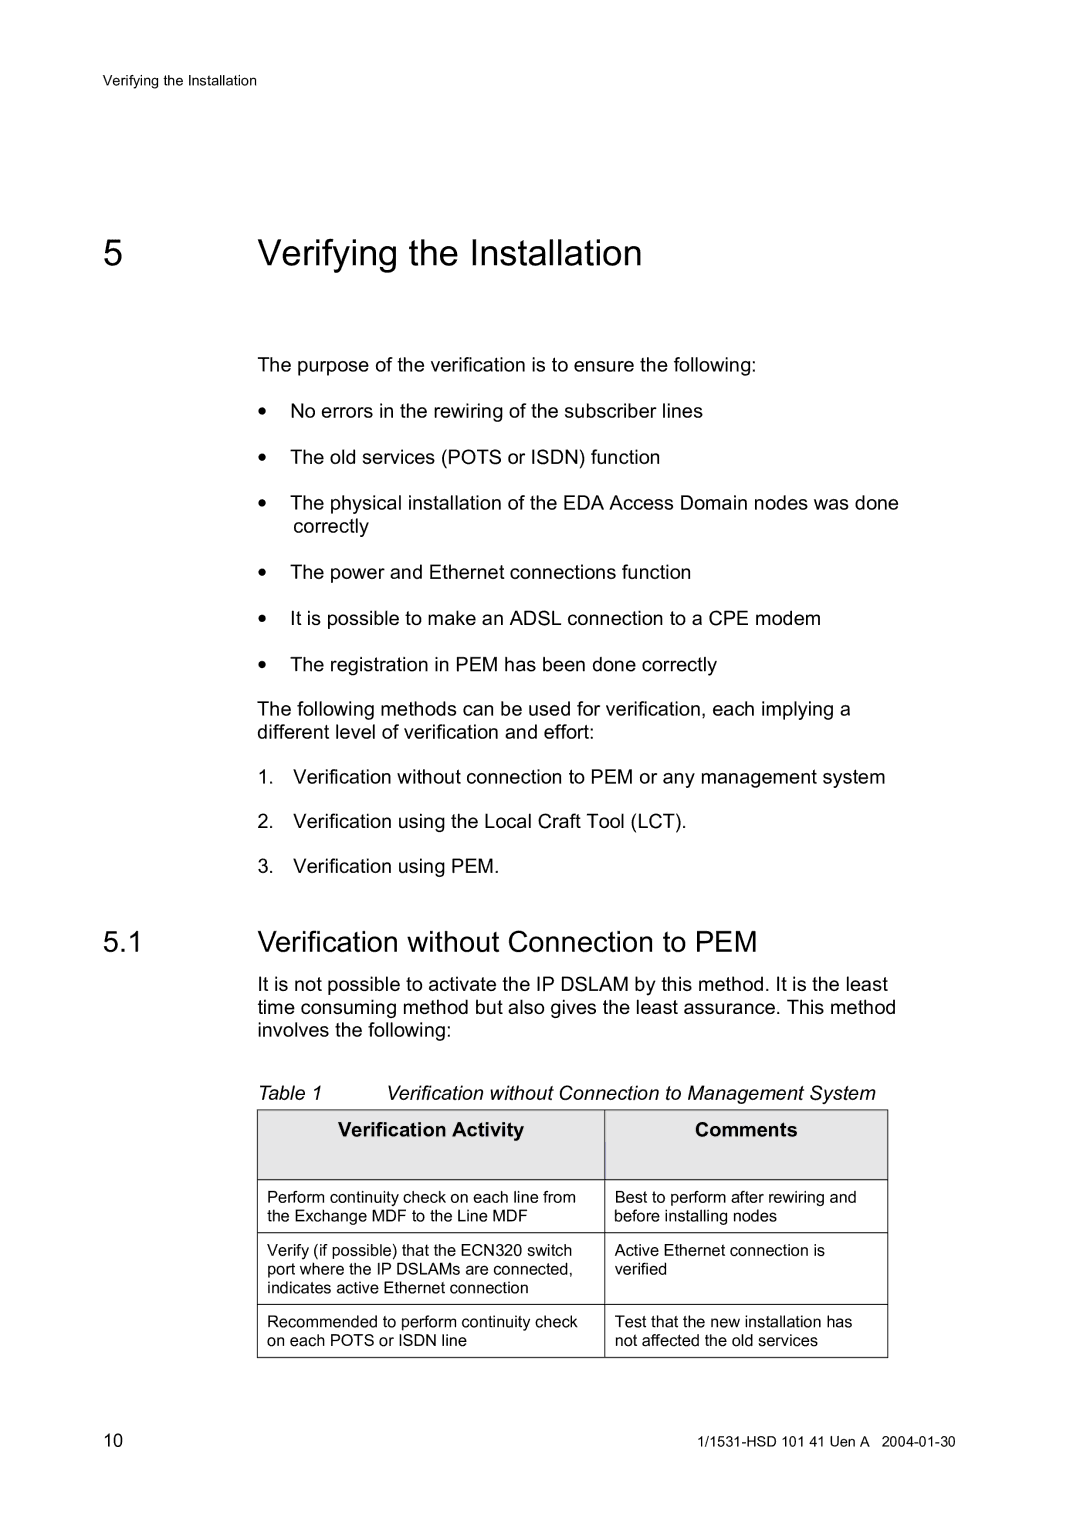 Ericsson IP DSLAM, EDN312 manual Verification without Connection to PEM, Verification Activity Comments 